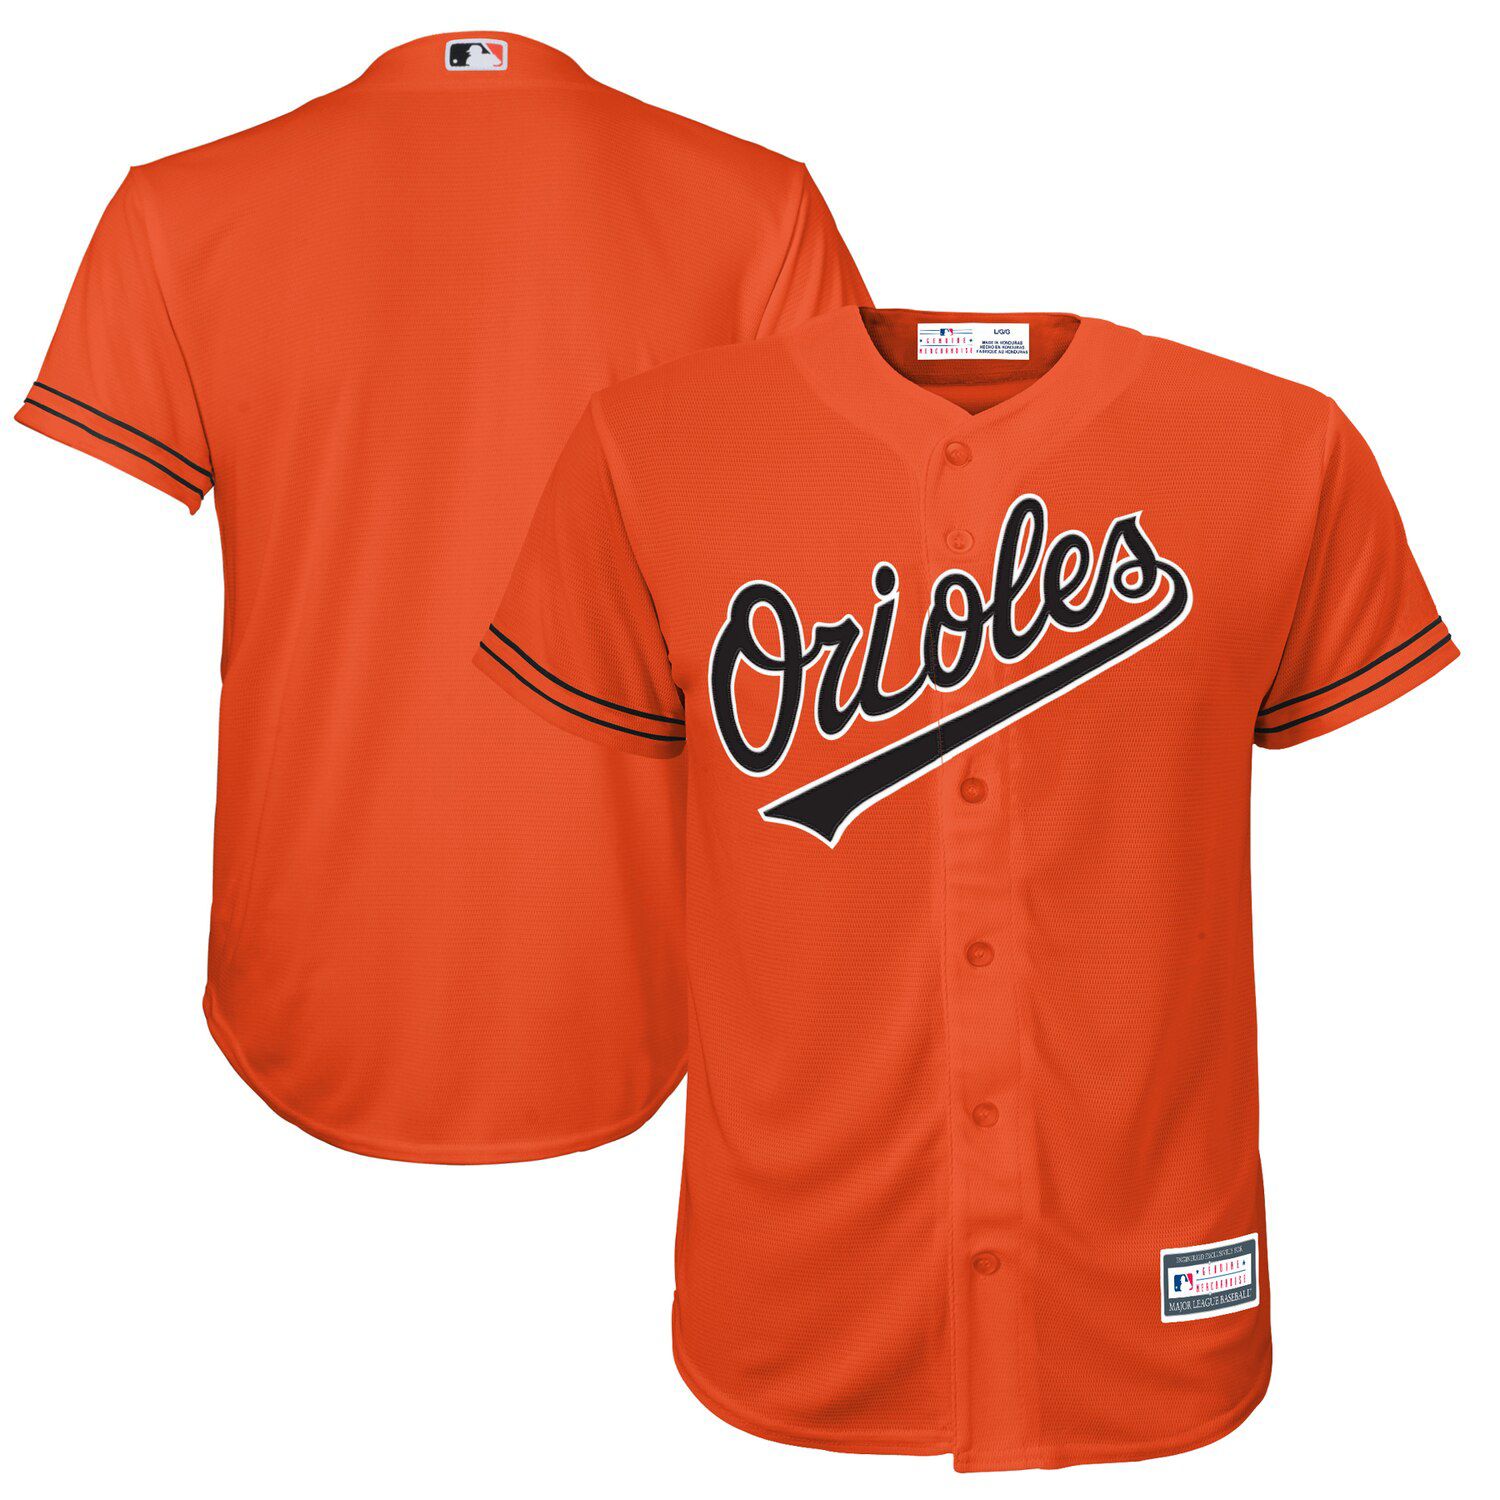 orioles orange jersey